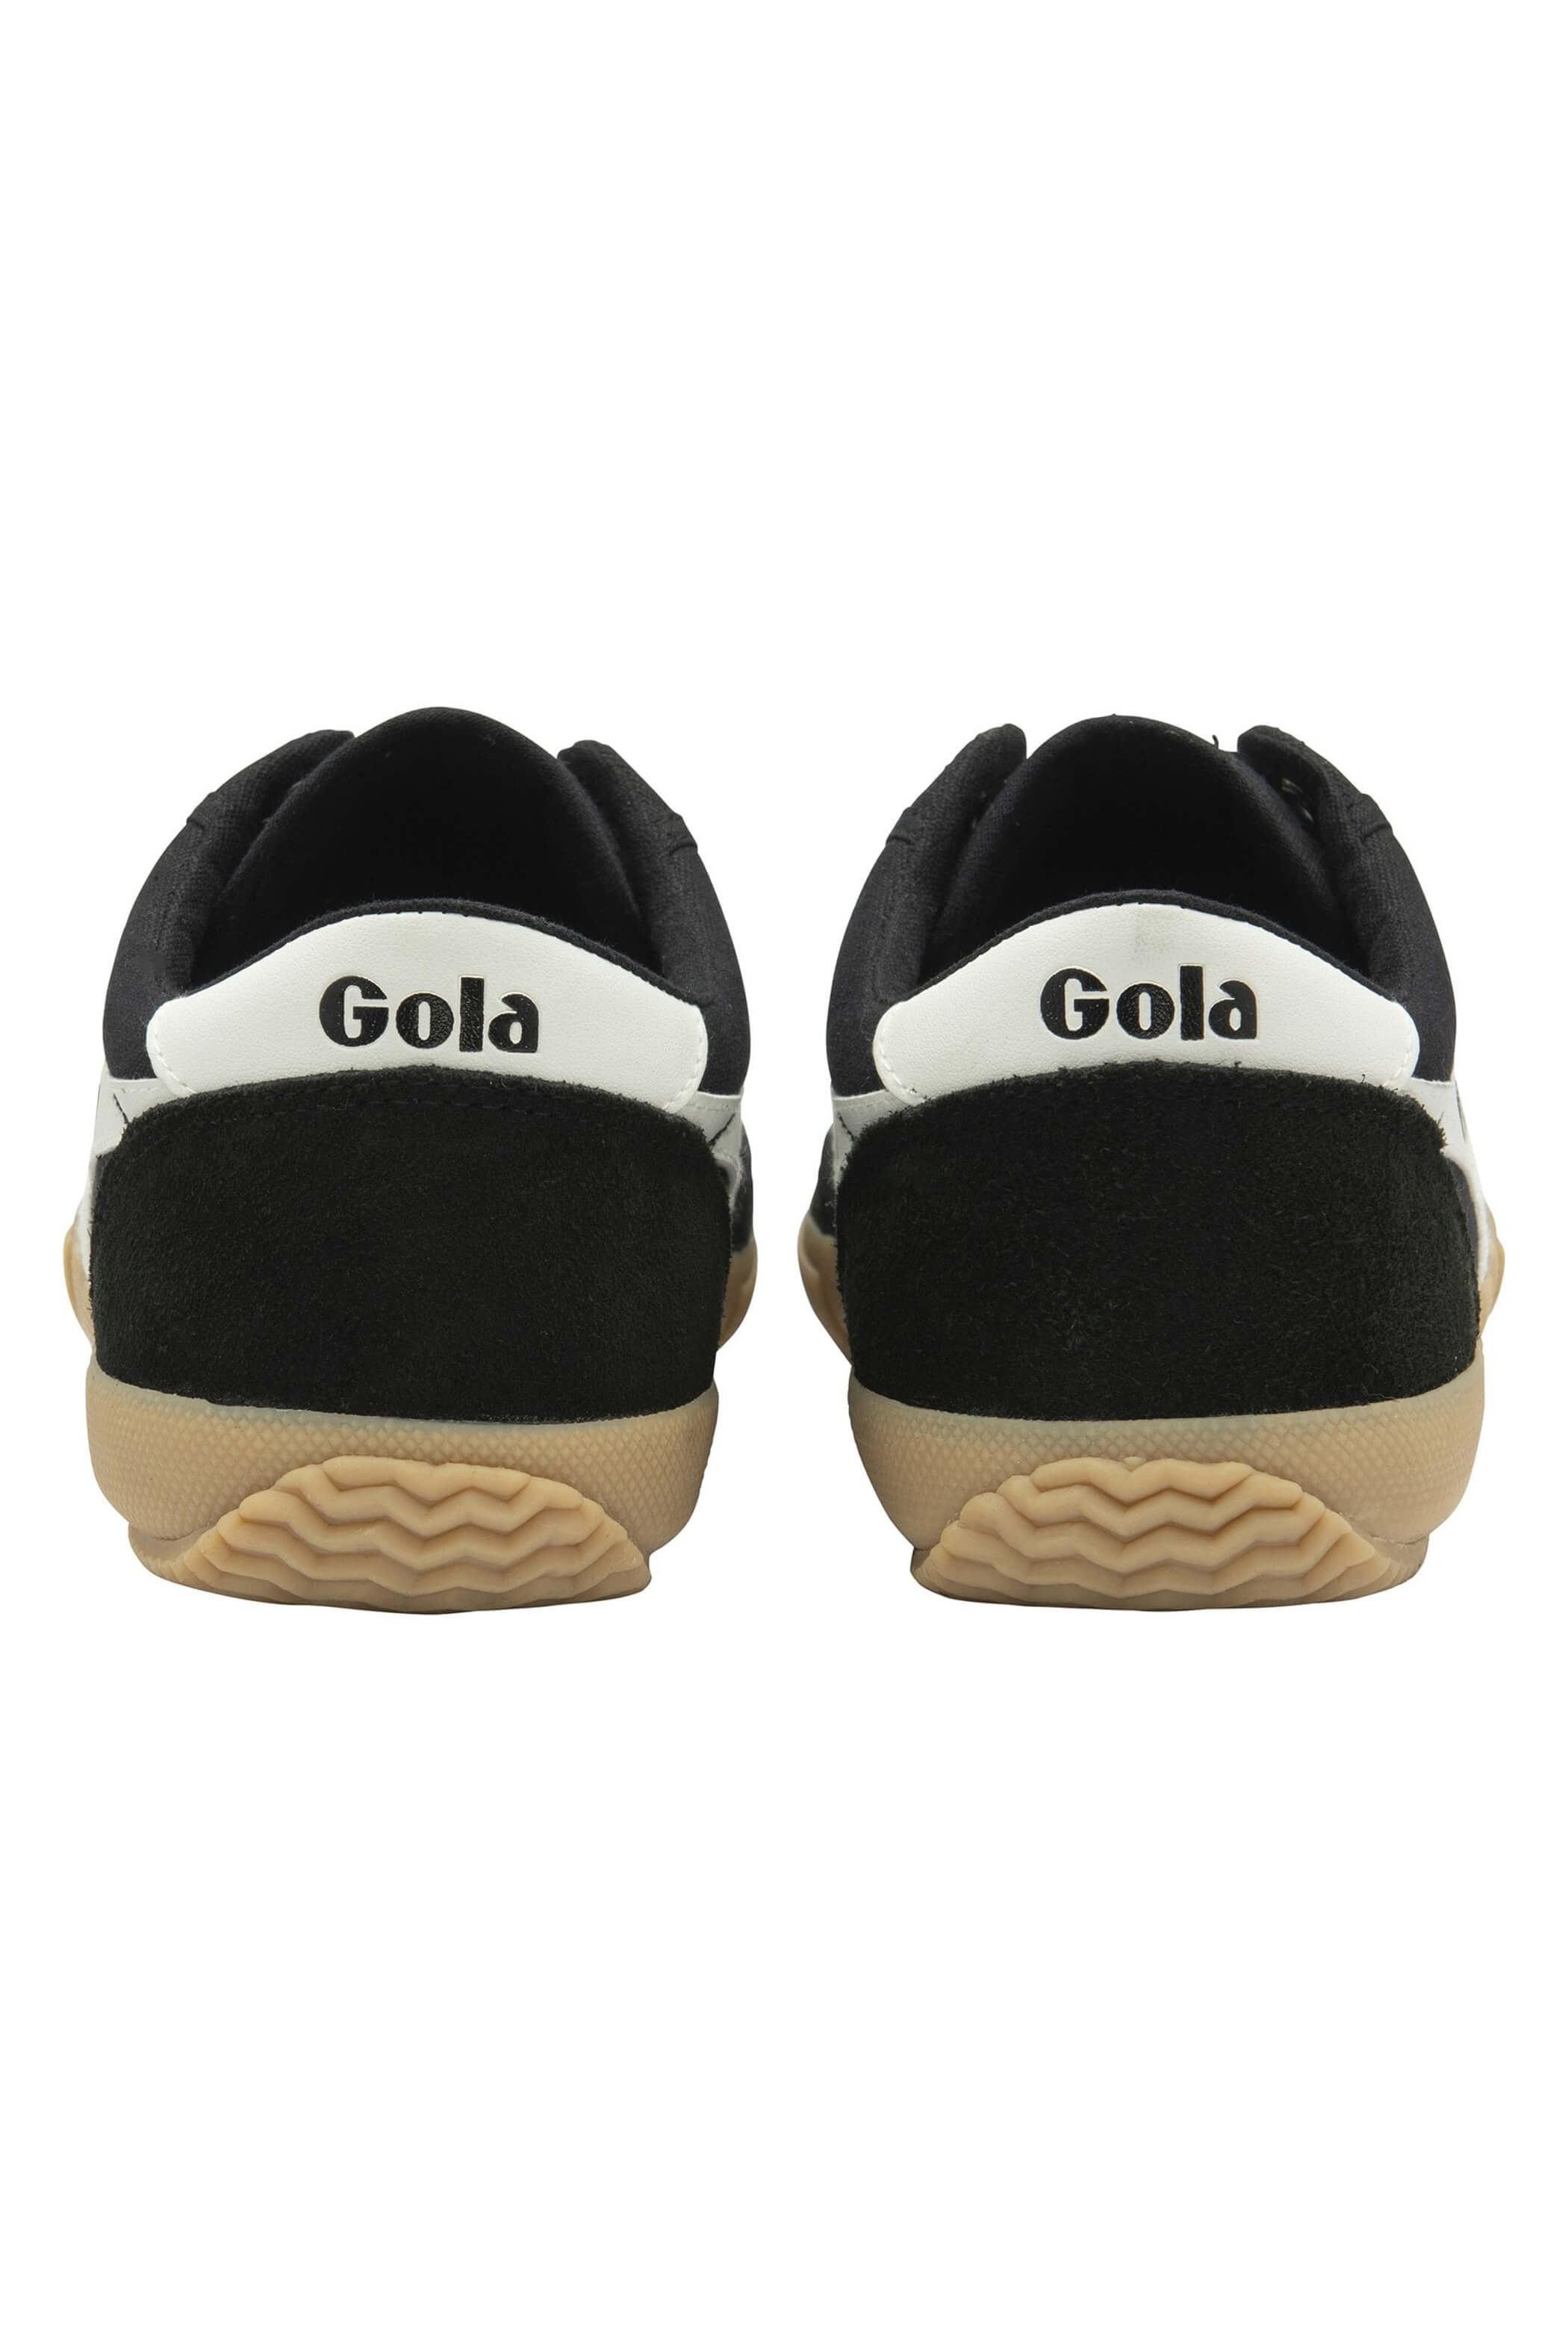 Gola badminton shoe in black off white and gum